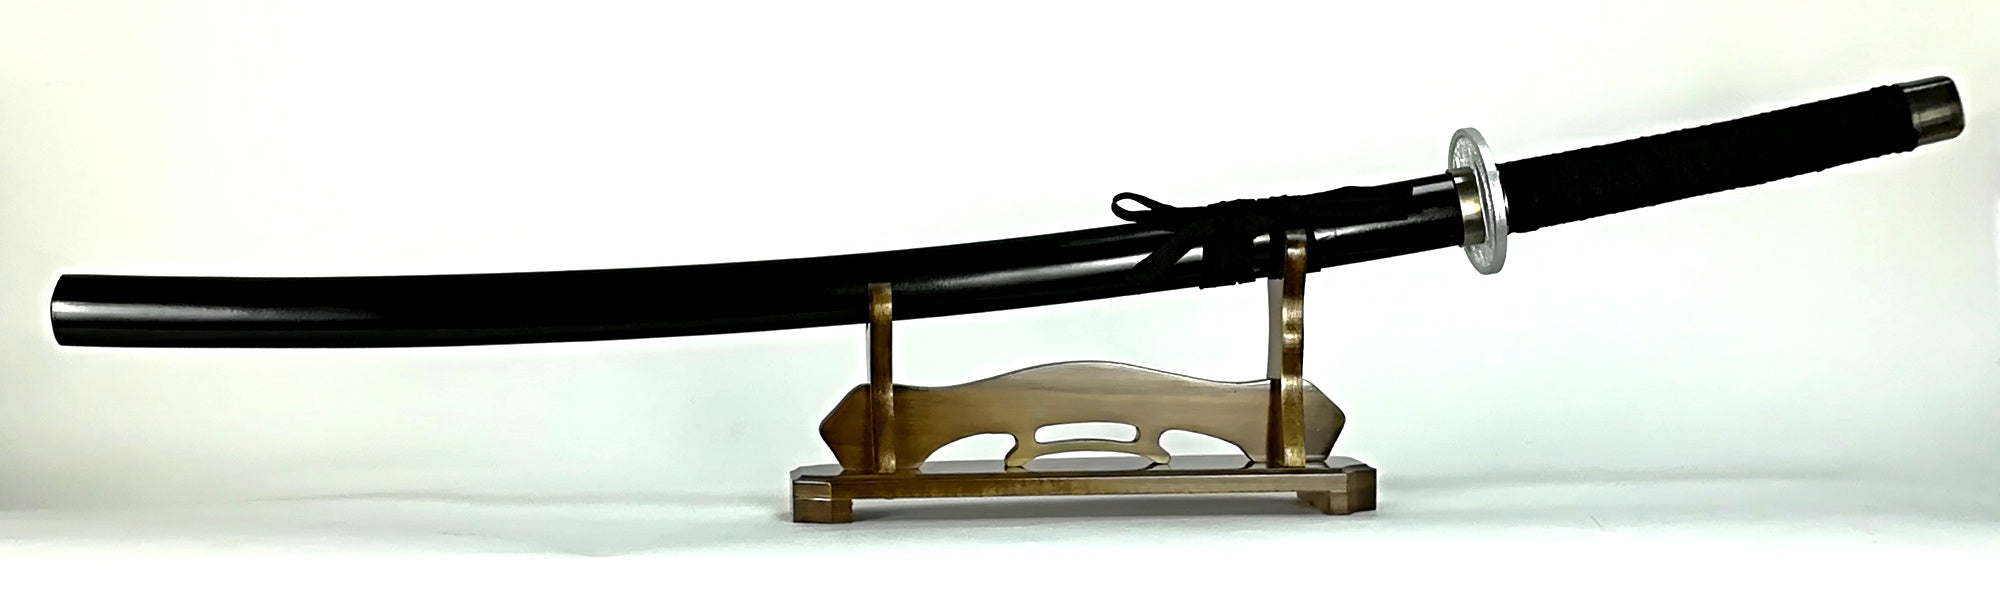 逆刃刀 刀掛別売  日本刀 模造刀 武士刀 木製 木 コスプレ 飾り S315